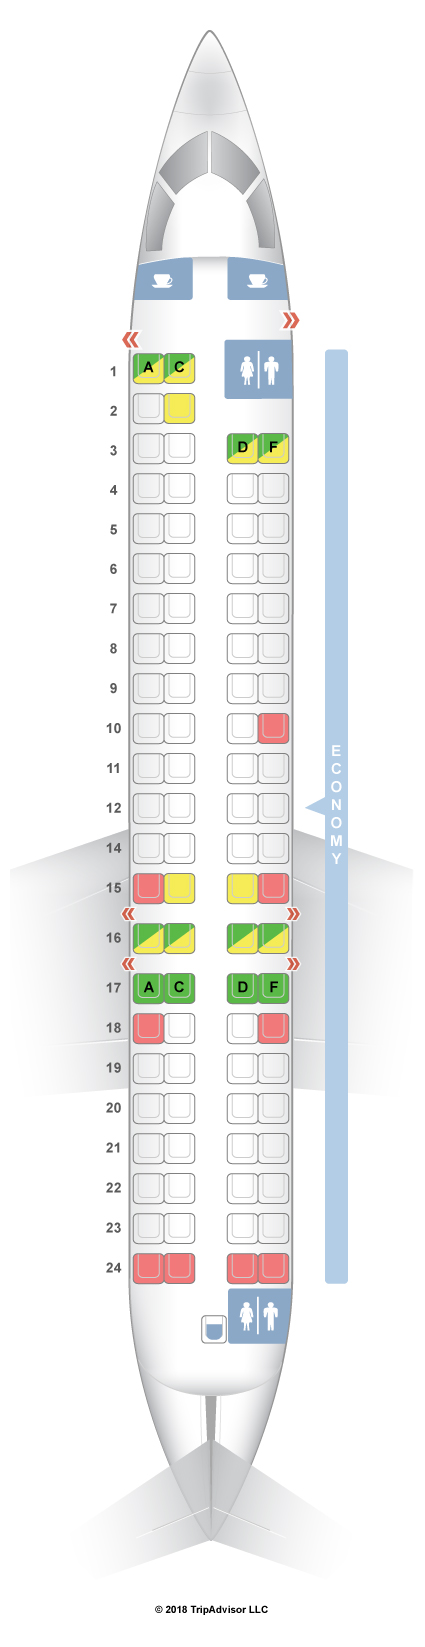 Air Canada Jazz Seating Chart